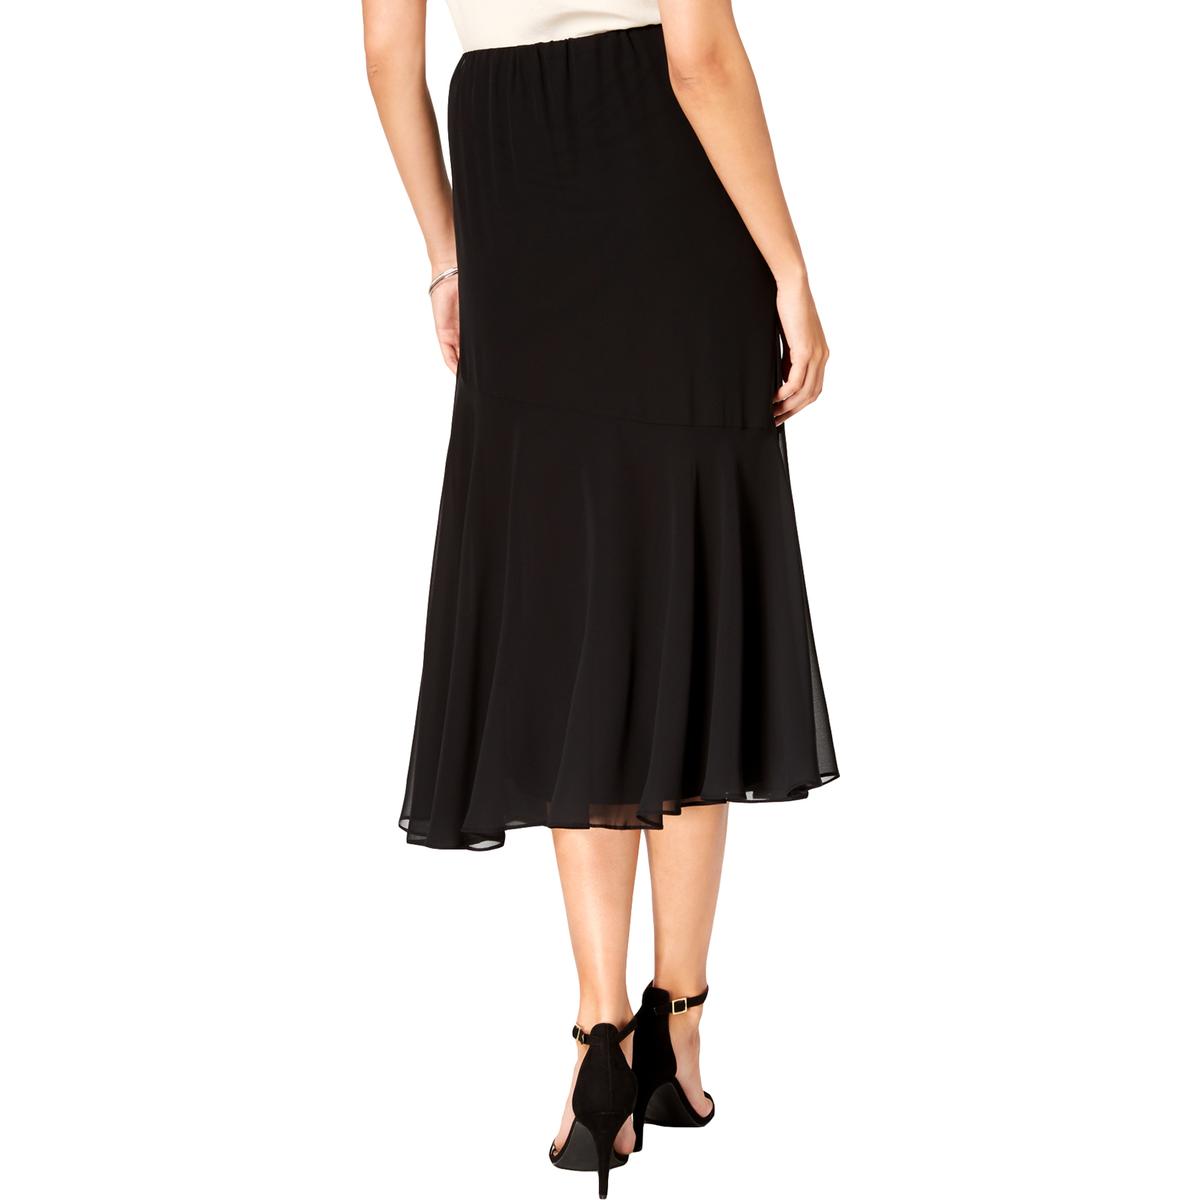 Alex Evenings Womens Black Sheer Overlay A-Line Skirt Petites PXL BHFO ...